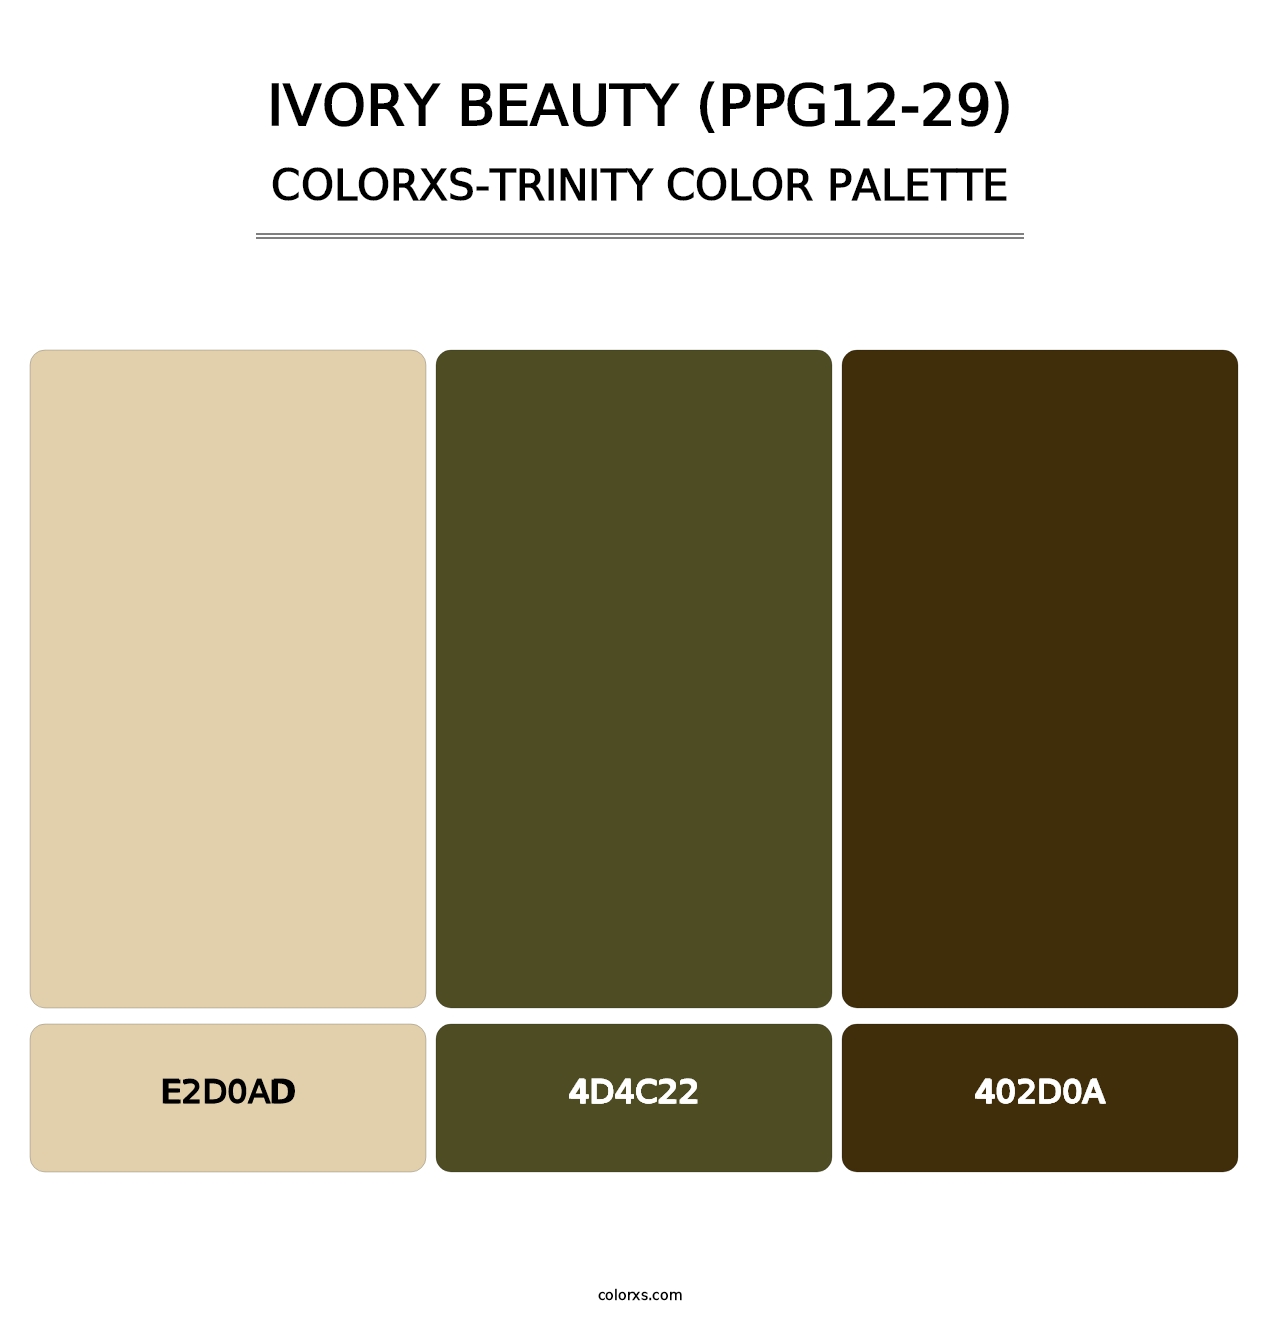 Ivory Beauty (PPG12-29) - Colorxs Trinity Palette